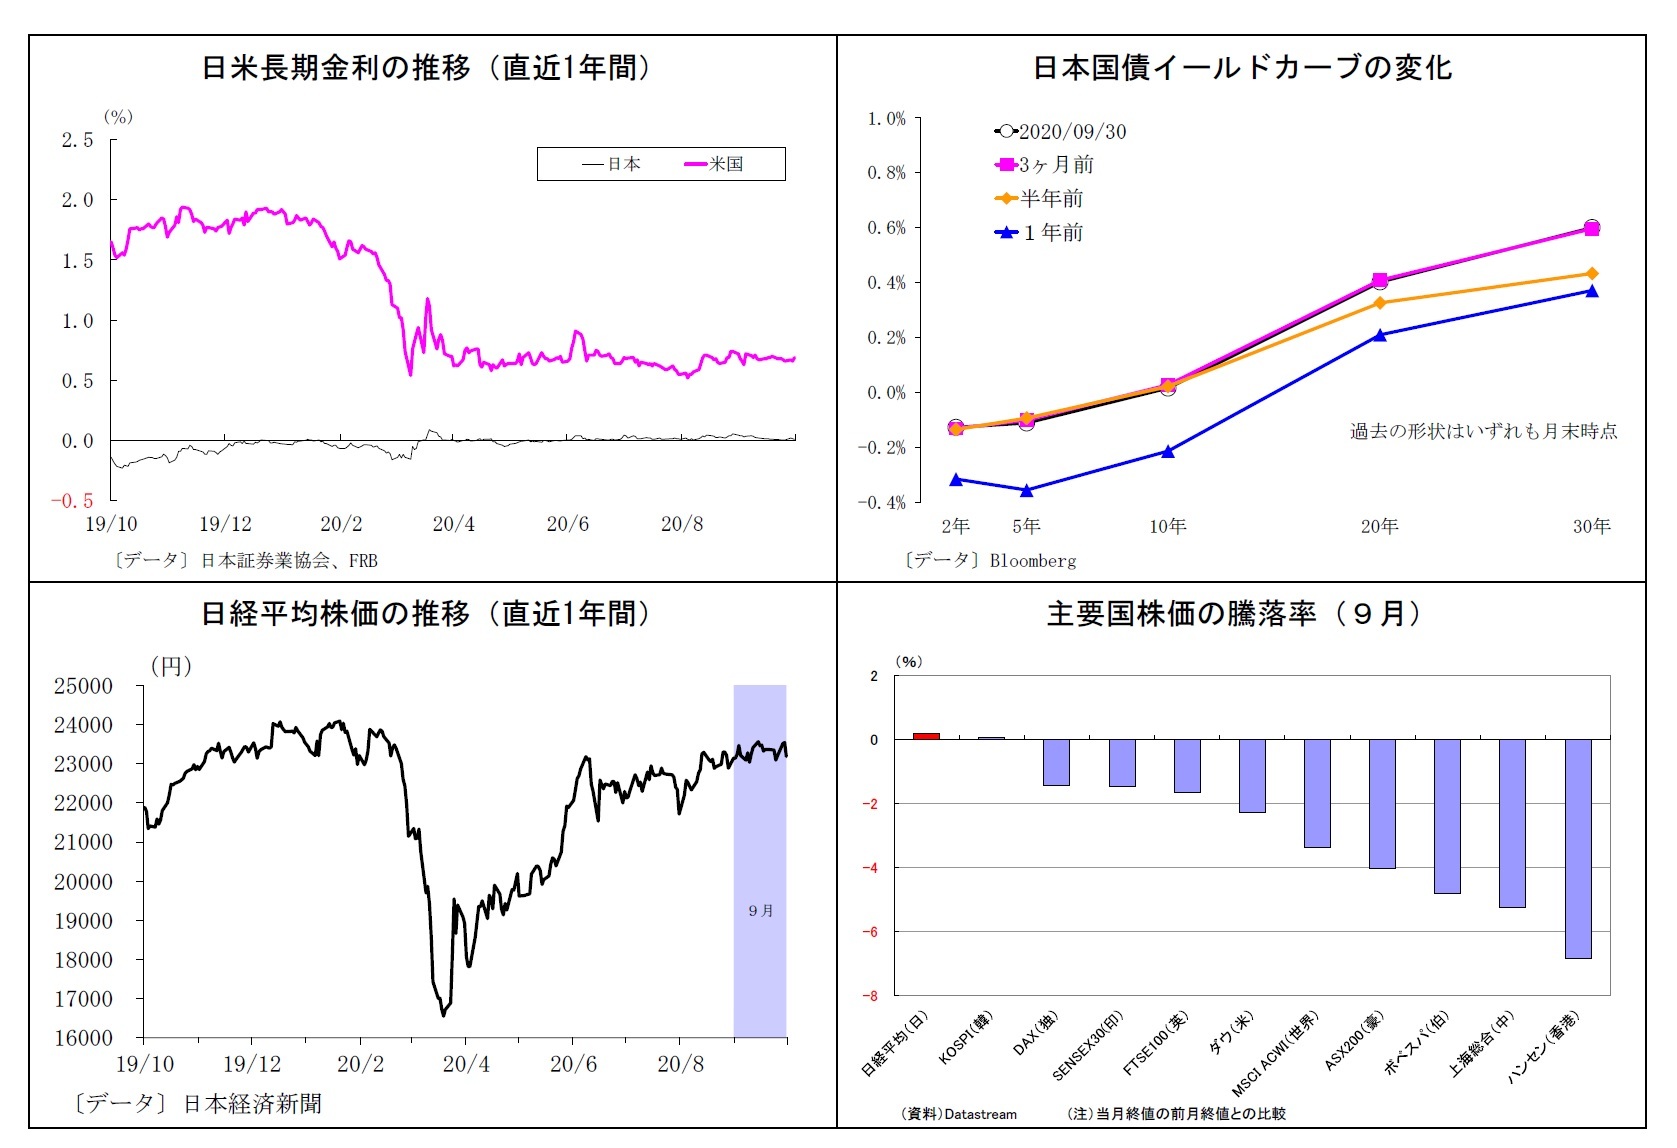 日米長期金利の推移（直近1年間）/日本国債イールドカーブの変化/日経平均株価の推移（直近1年間）/主要国株価の騰落率（９月）